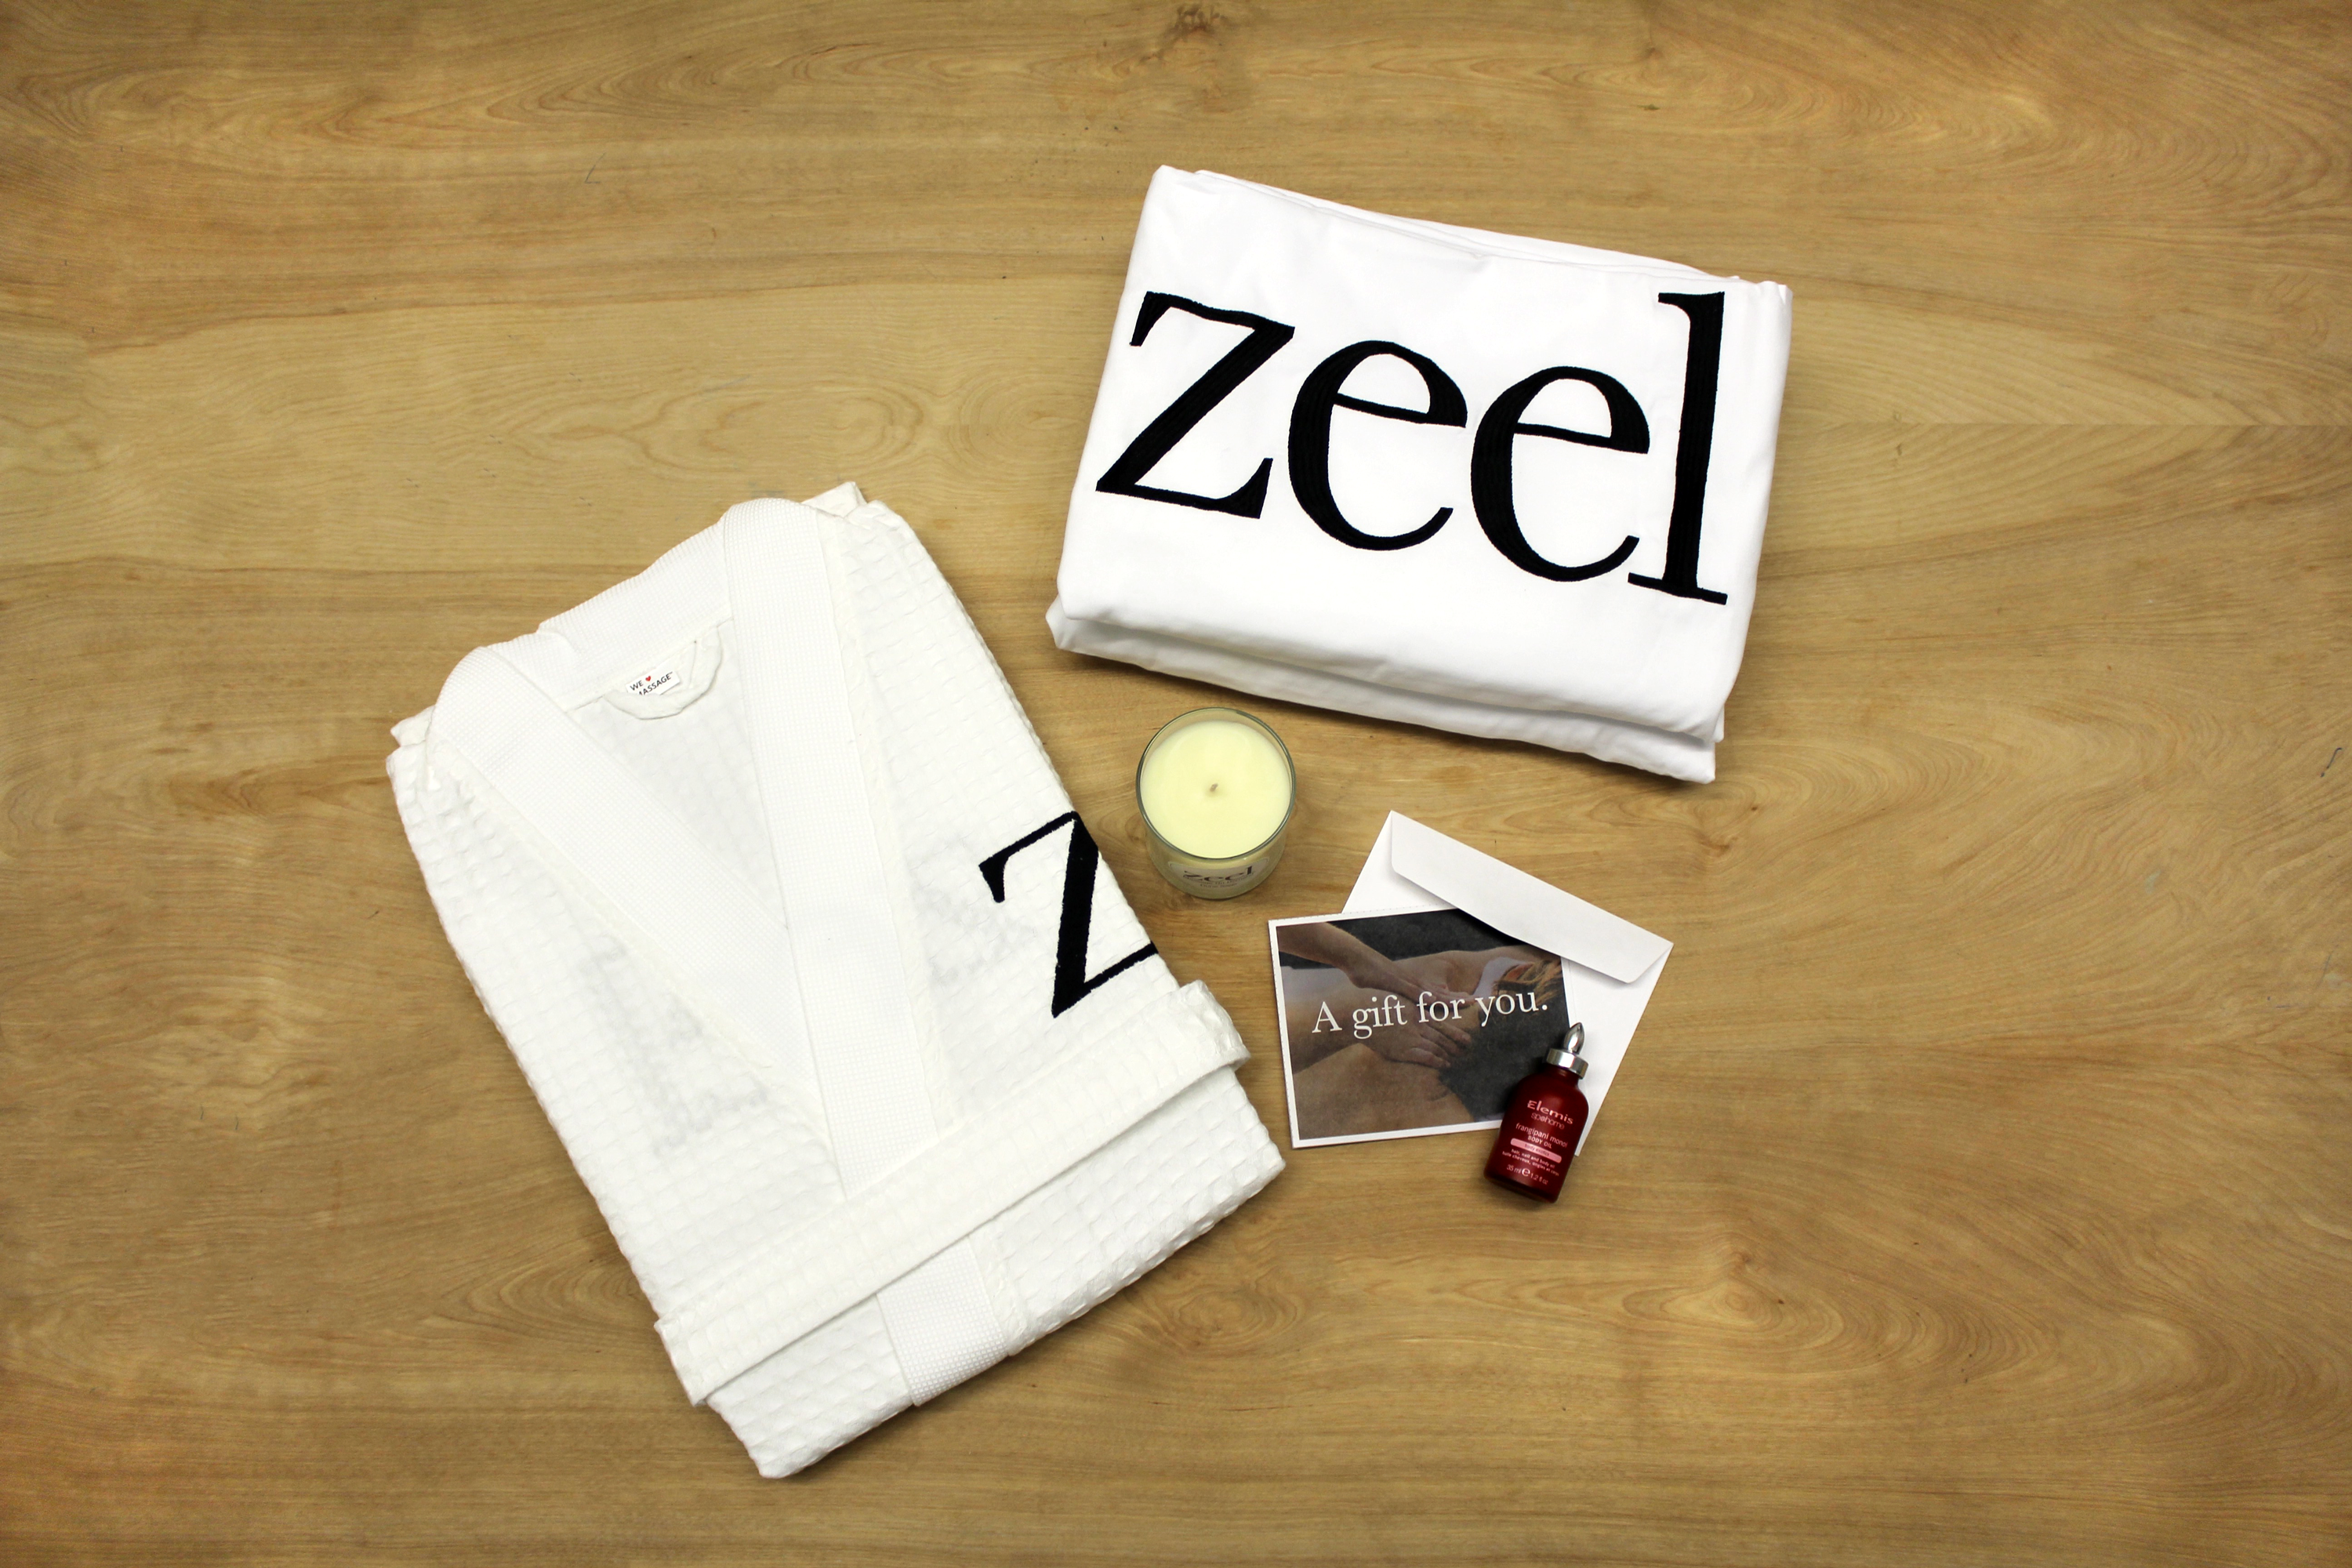 zeel-gift-package